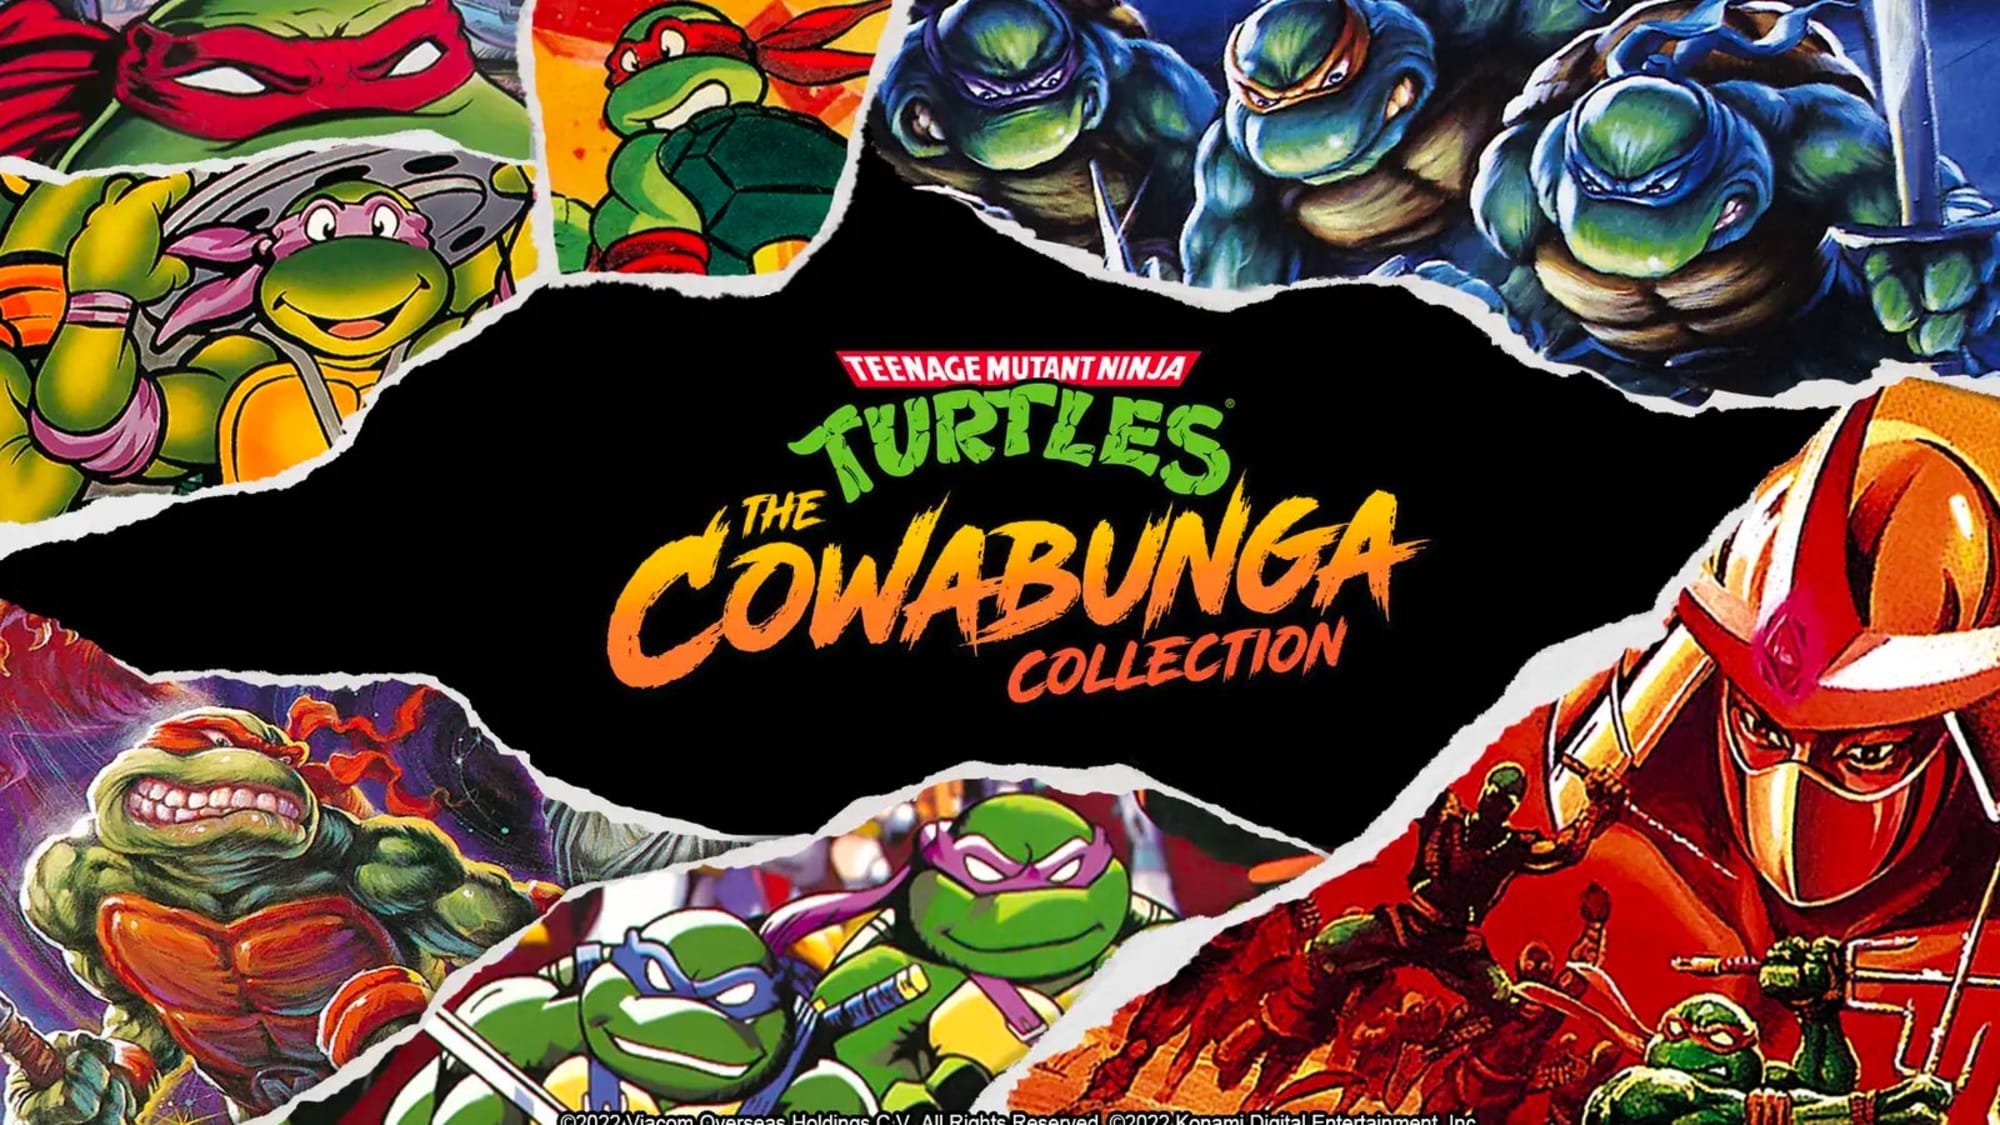 Cowabunga! Giants to wear bodacious Ninja Turtles jerseys (PHOTOS)